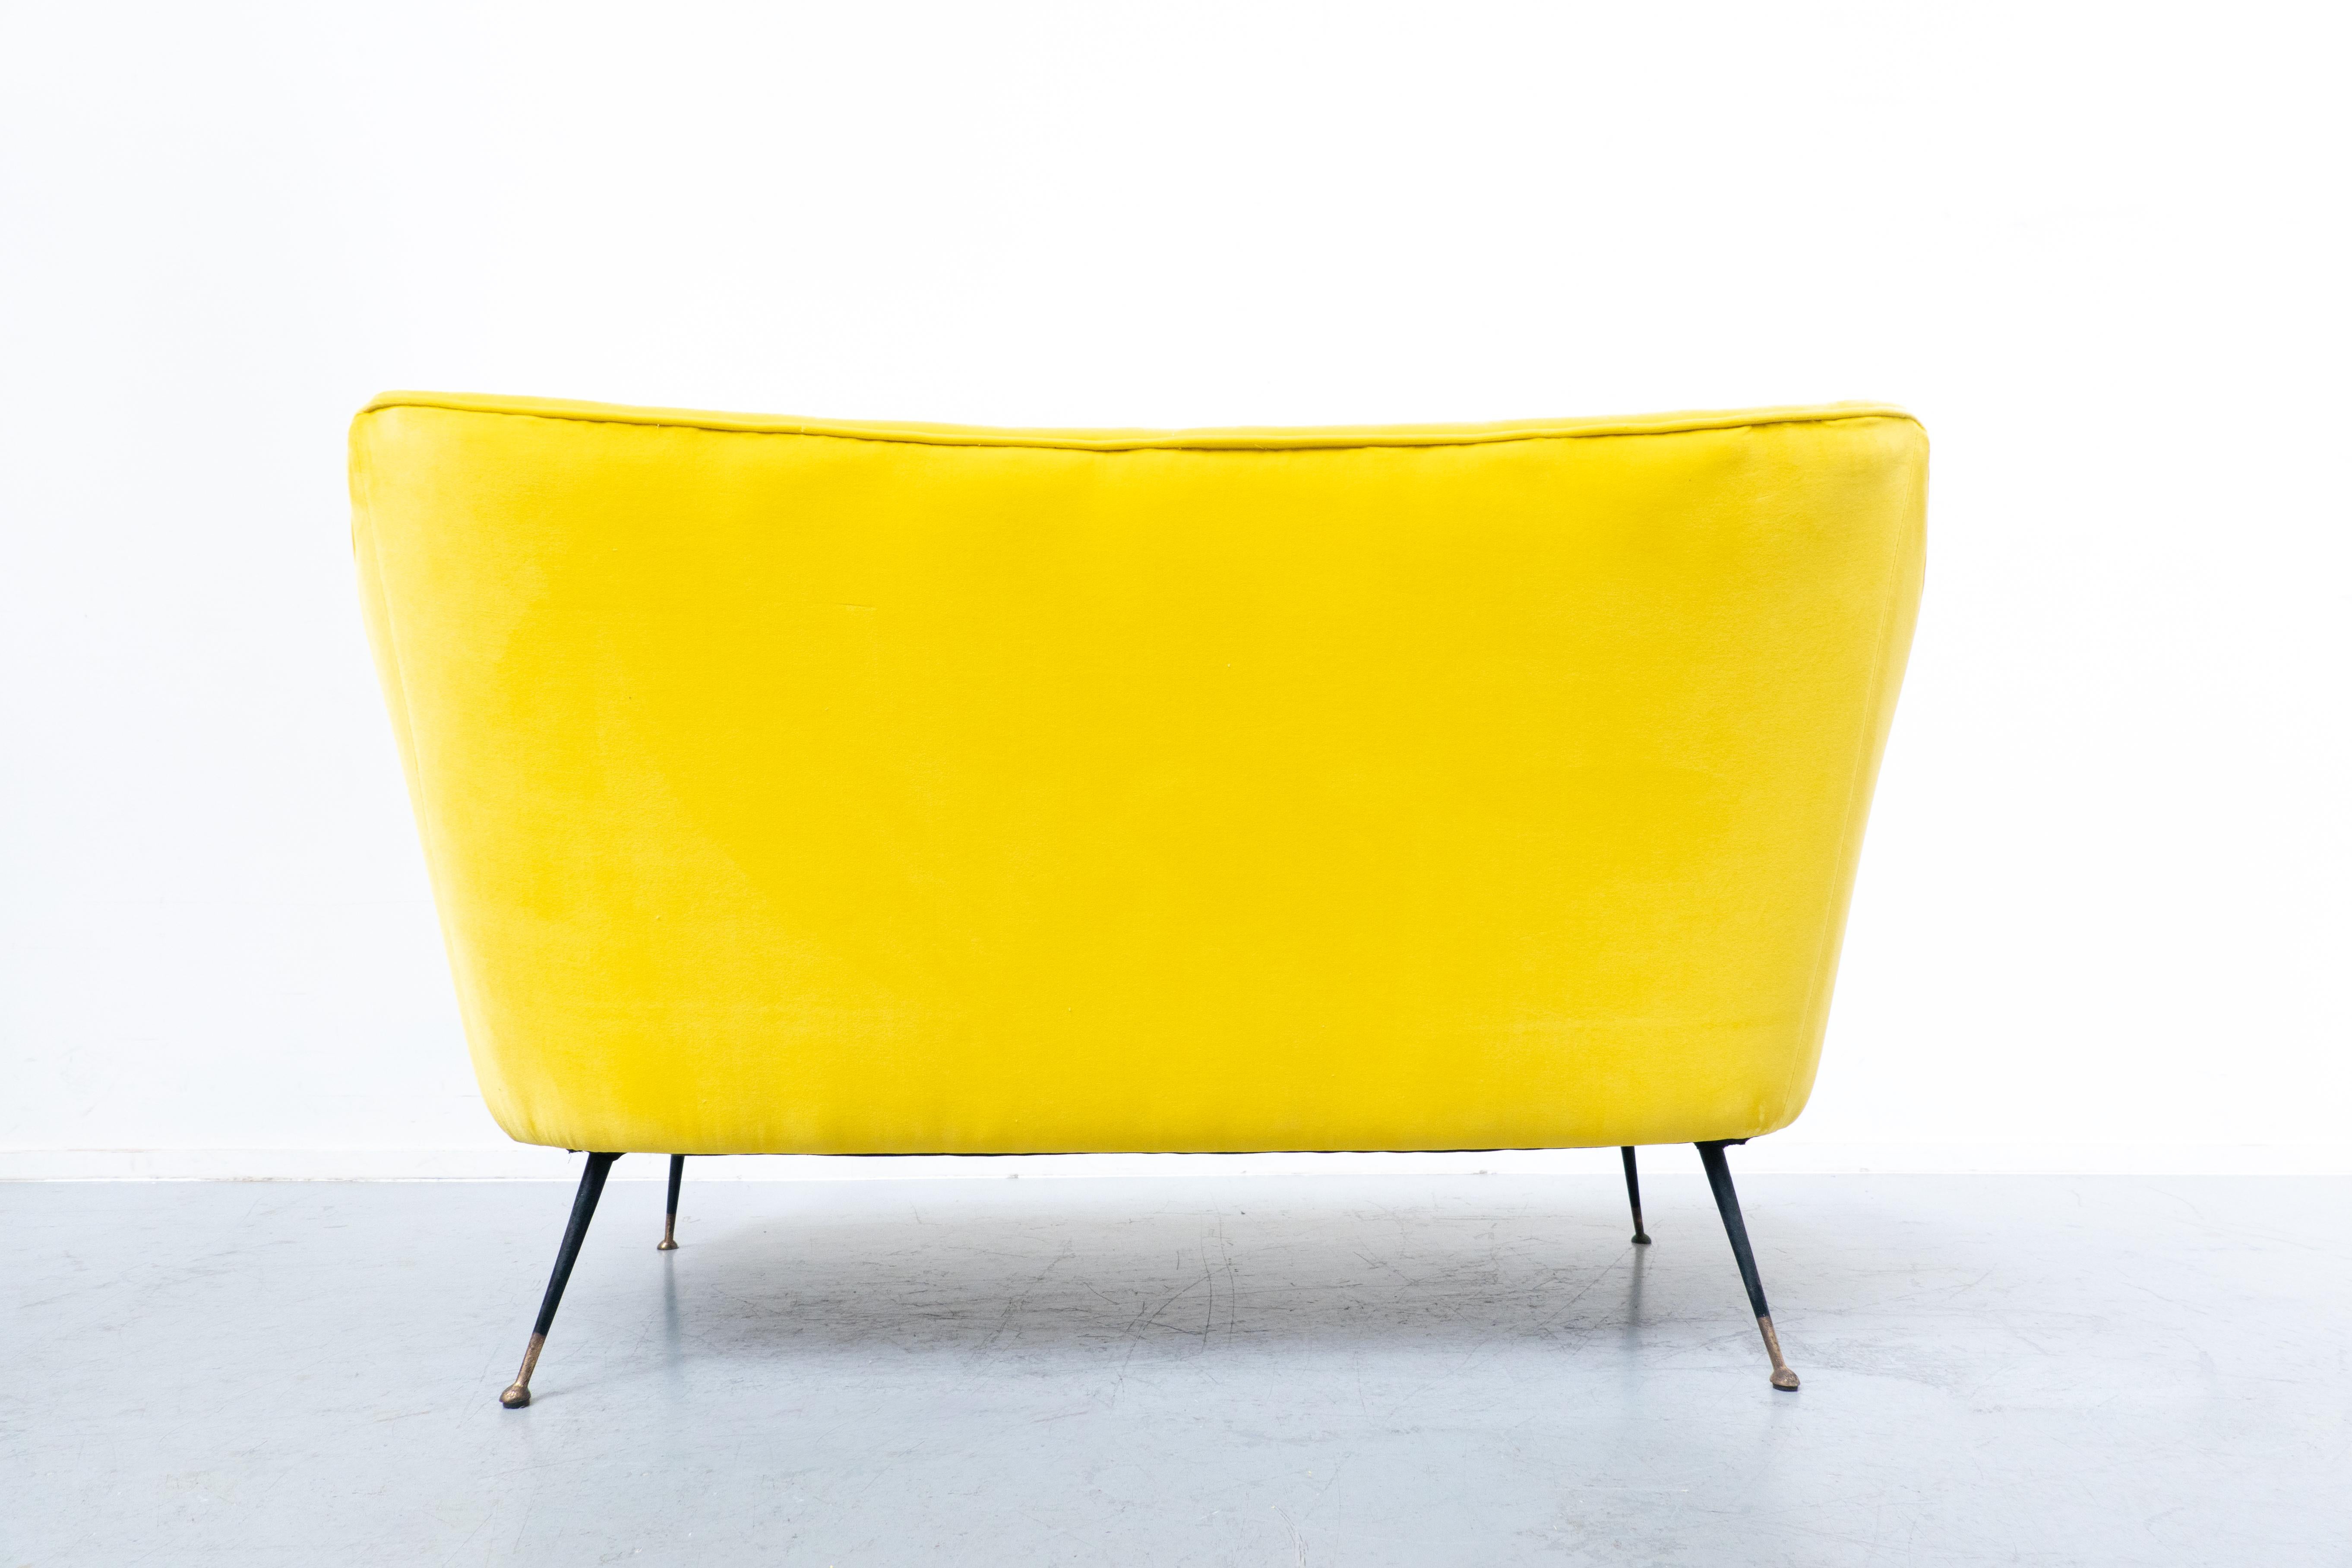  Mid-Century Modern Italian Yellow Fabric Sofa, 1960s For Sale 1